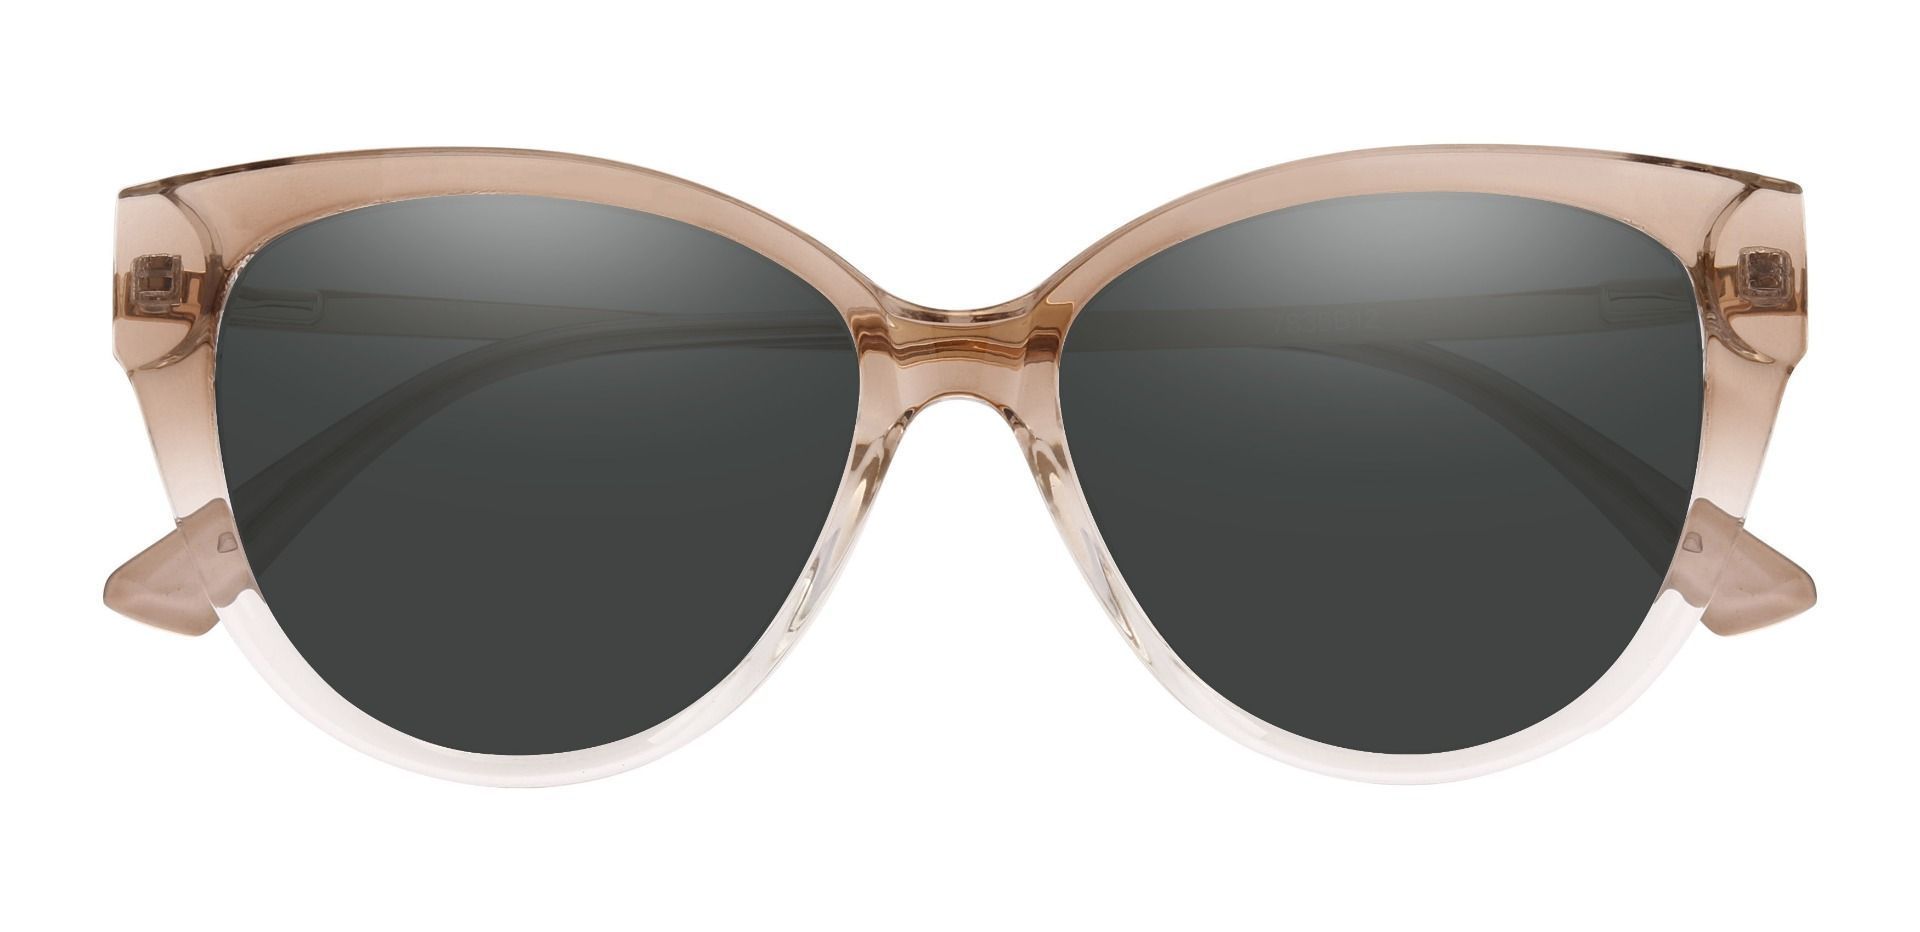 Kaycee Cat Eye Prescription Sunglasses - Brown Frame With Gray Lenses